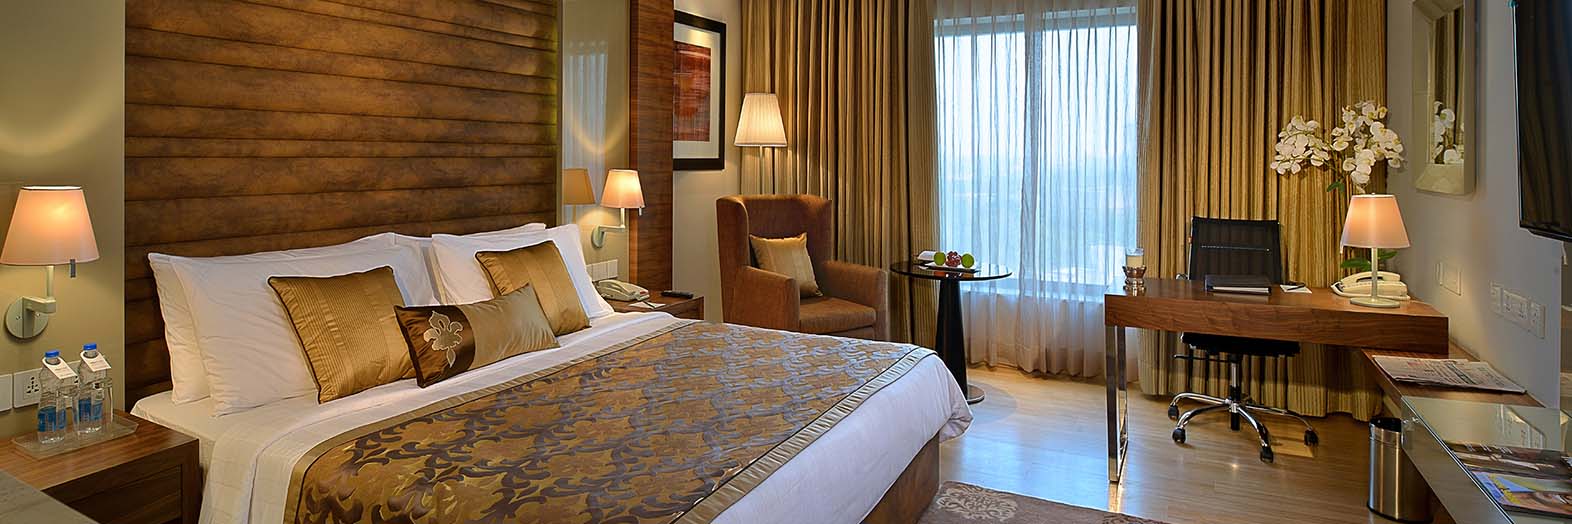 Fortune Inn Grazia – Gaziabad Hotels Room